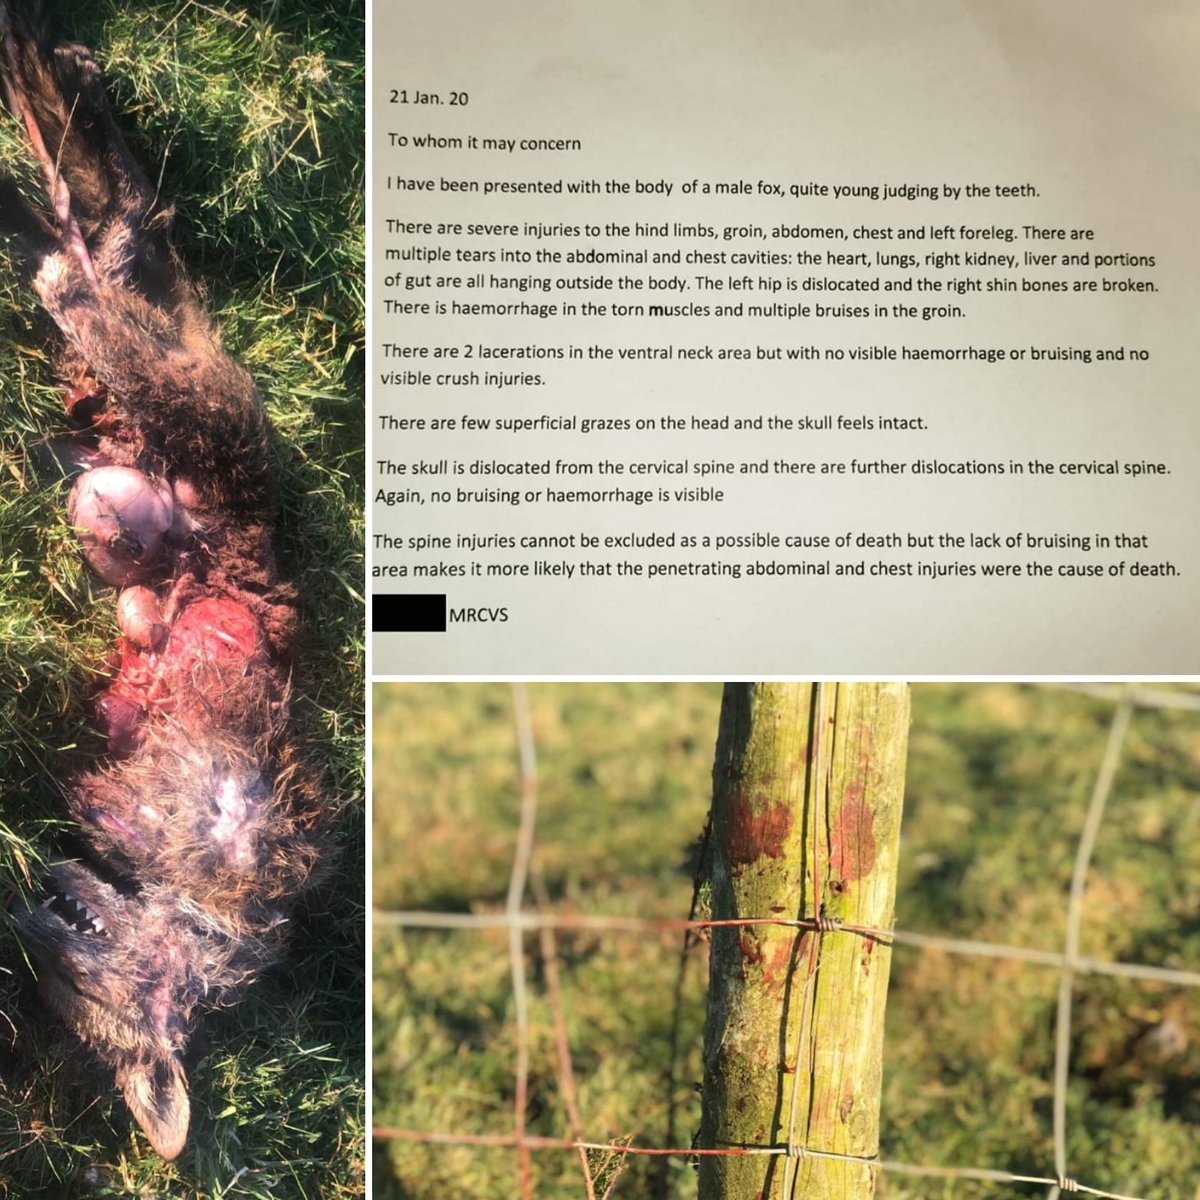 Postmortem of the #fox killed at the #weekend: #FuckTheHunt #AHAB #HuntSabs #HuntSaboteurs #AnimalRights #Activists #AnimalLiberation #ALF #AgainstAnimalCruelty #Vegan #Veganuary #KeepTheBan #PeacefulProtest #KeepThemSafe #Wildlife #Peterborough #Leicester #Activism #GetAngry